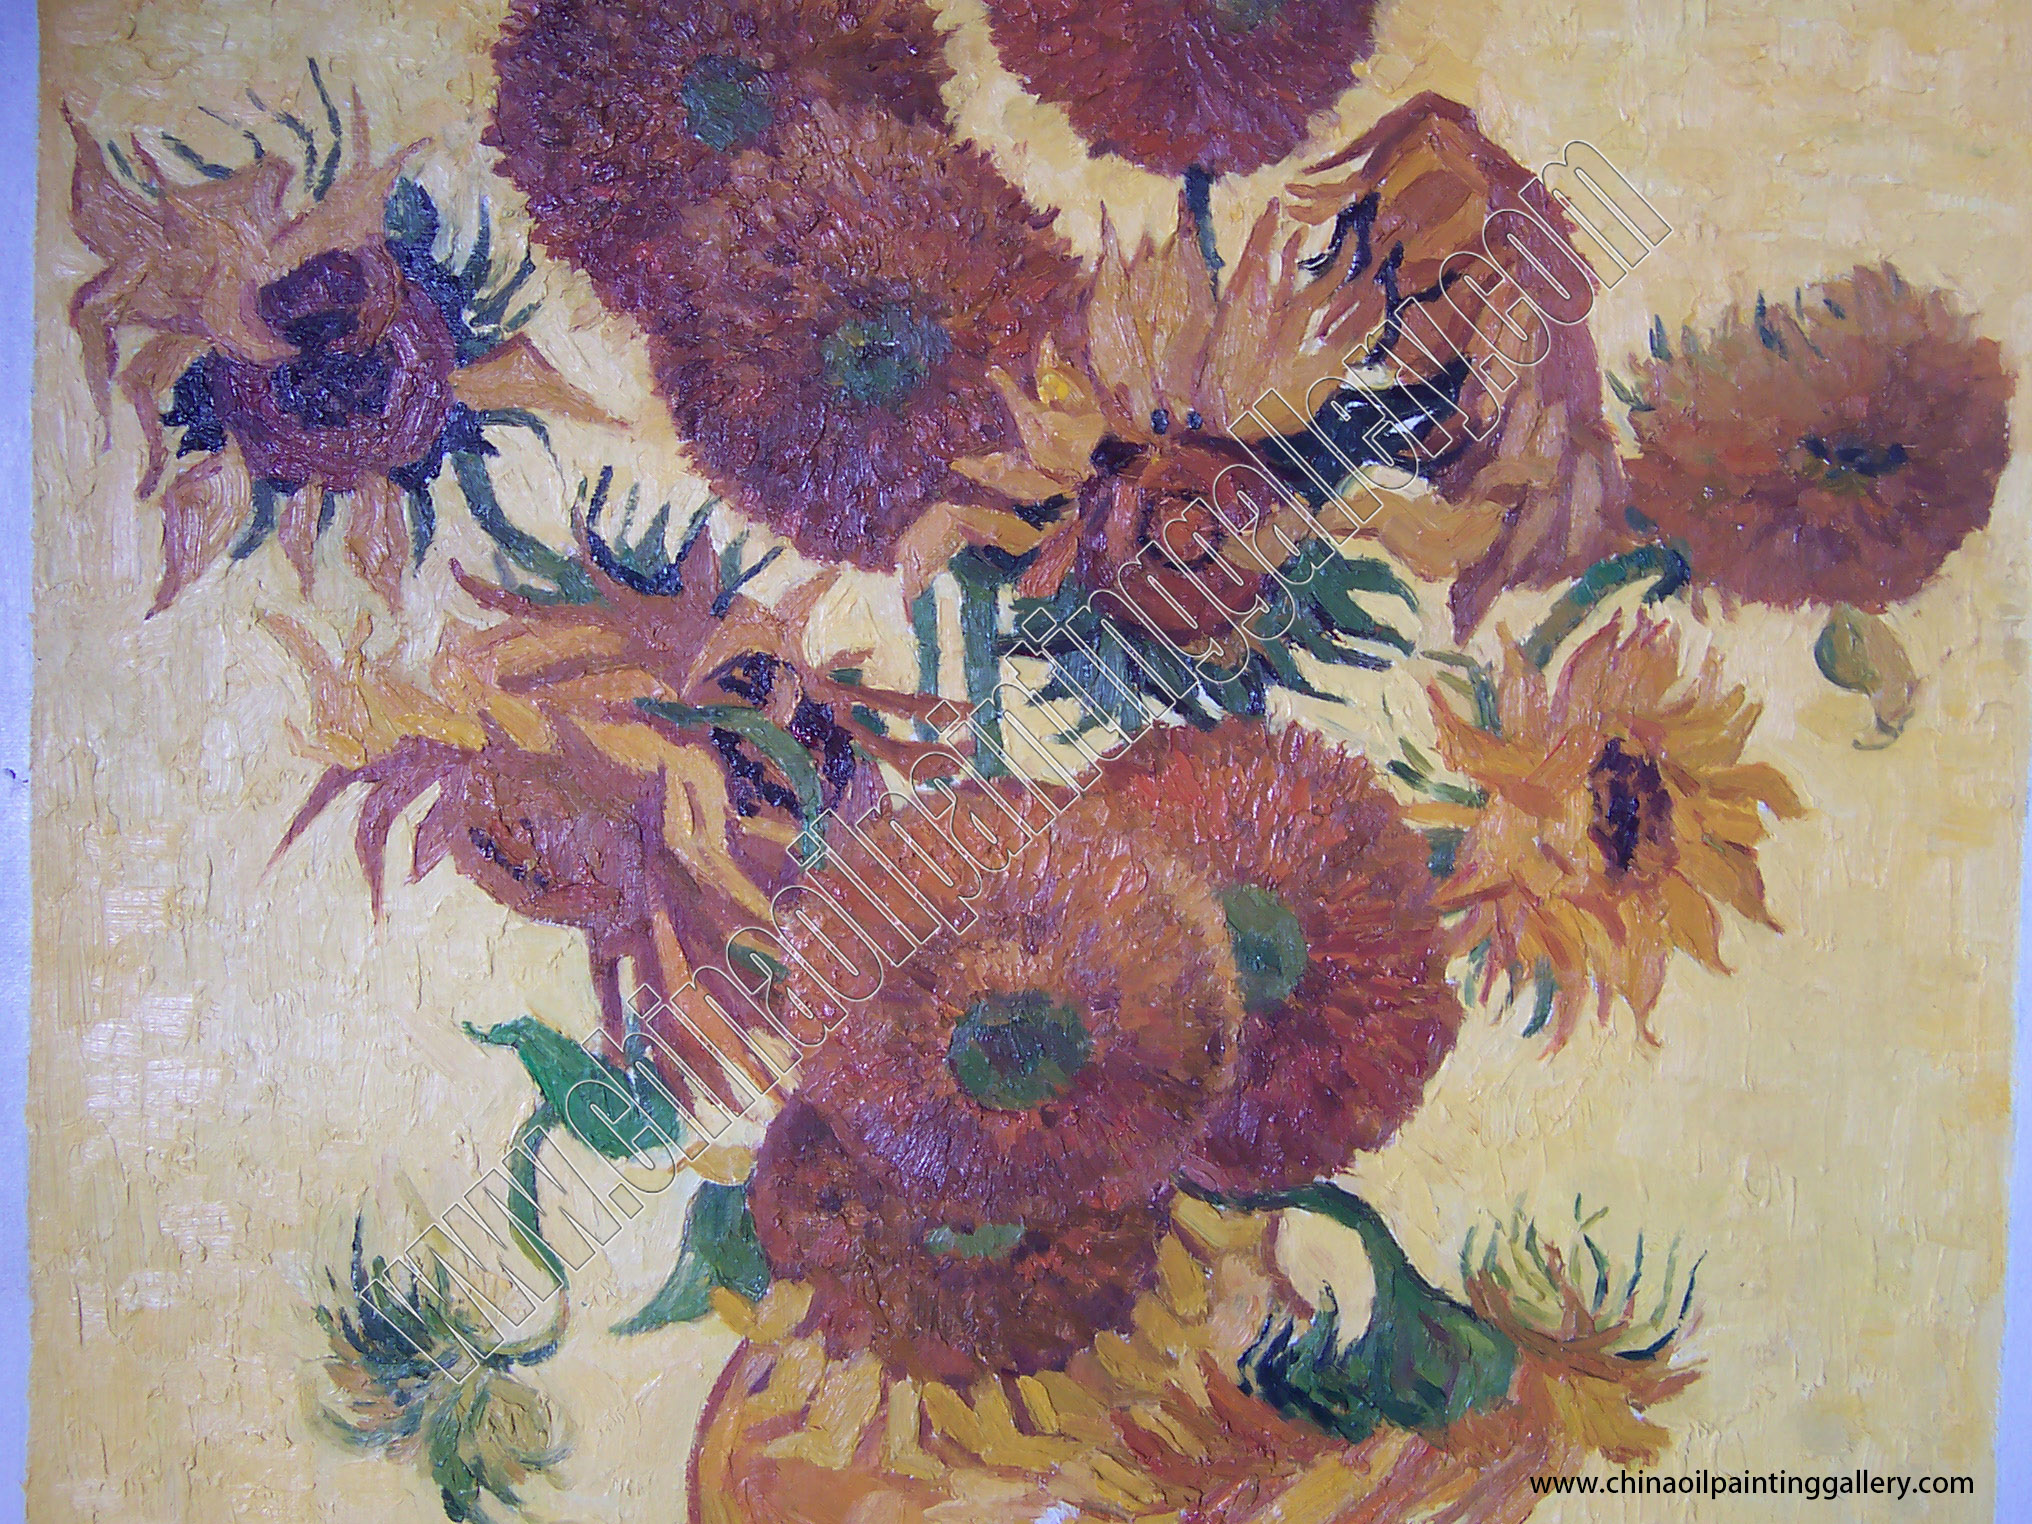 Vincent van Gogh Sunflowers - Oil painting reproductions details 1